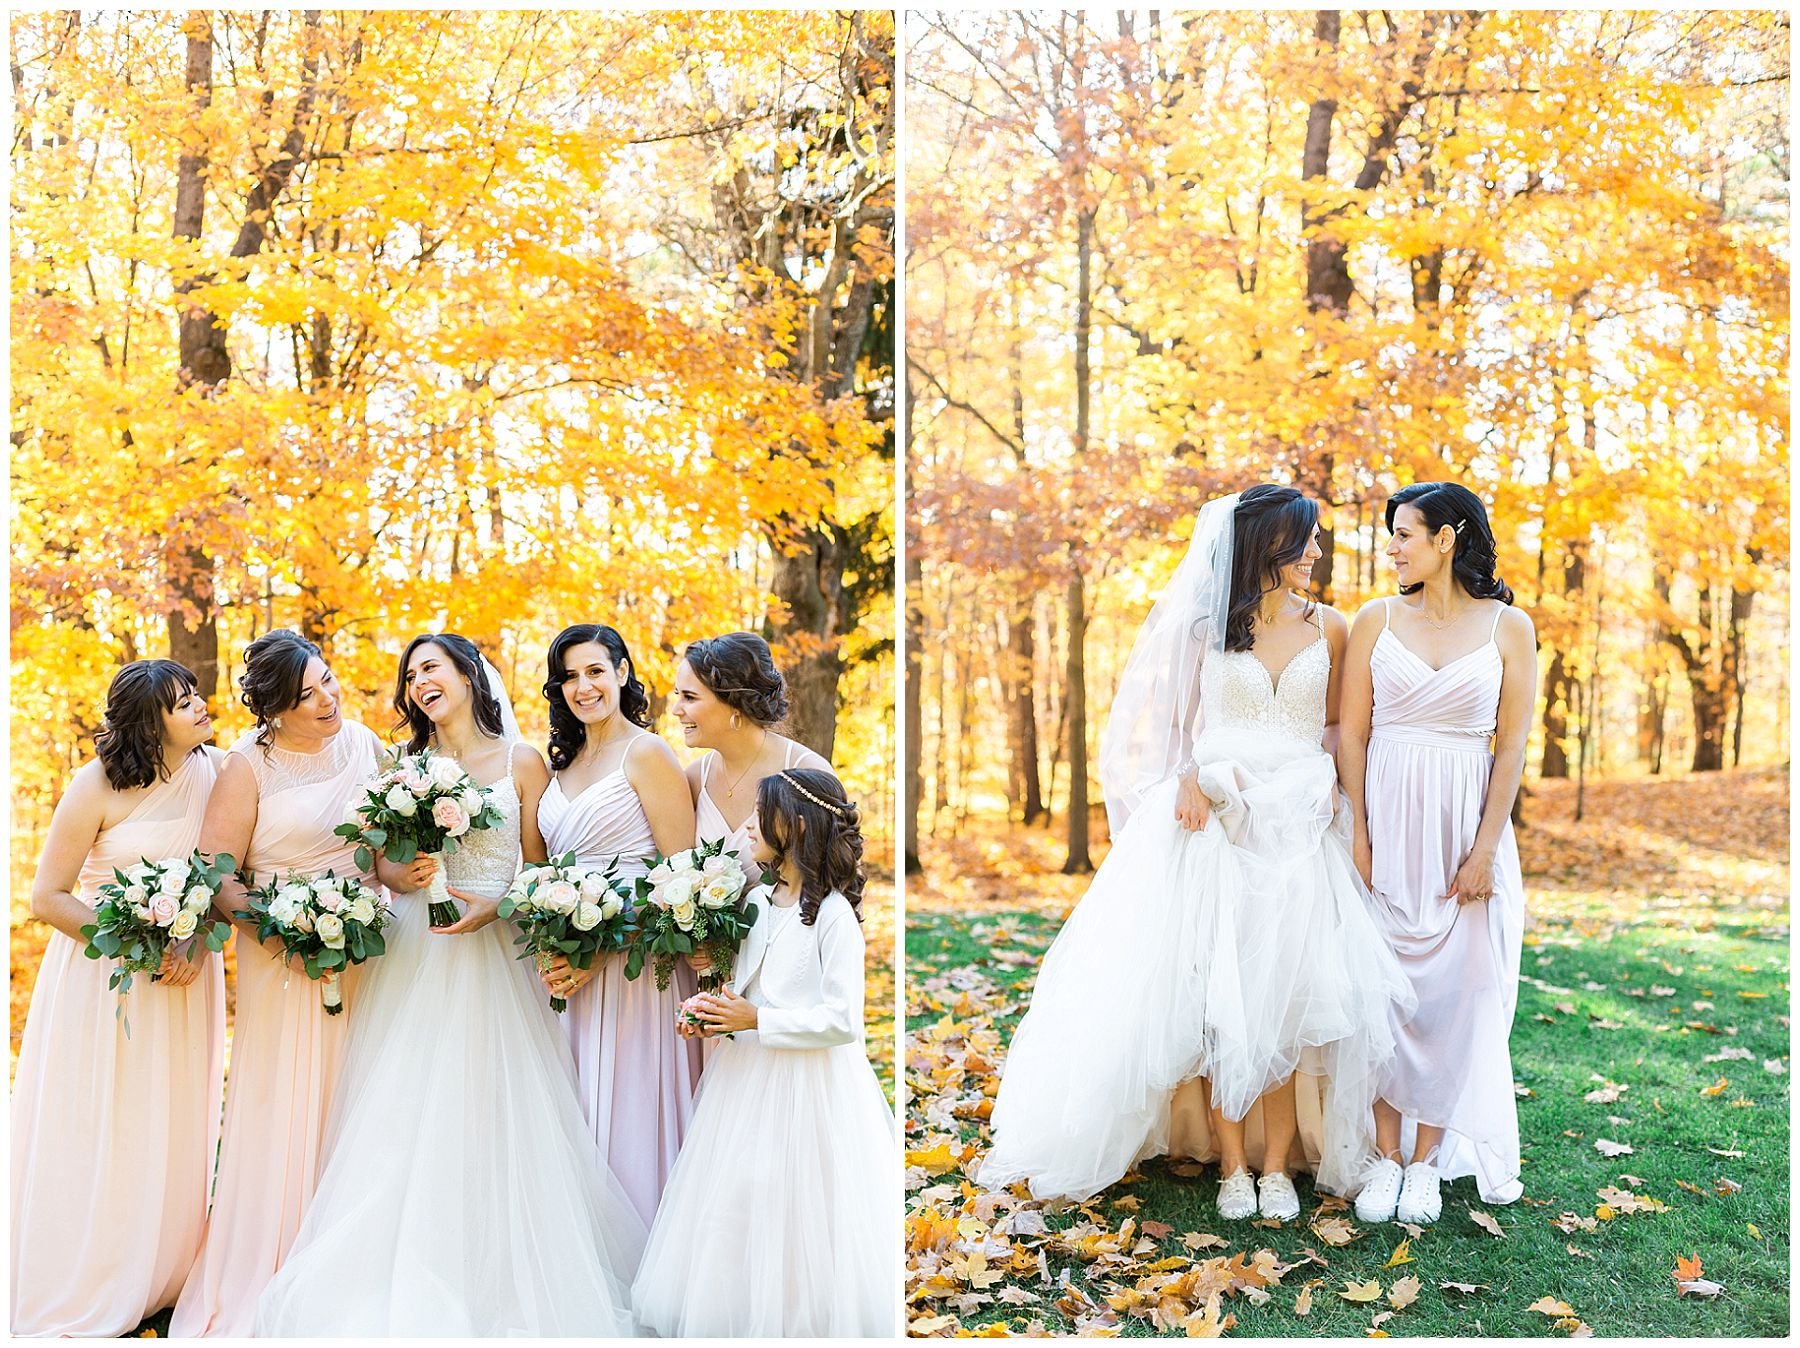 Bridesmaids photo at Mackenzie king estate during fall